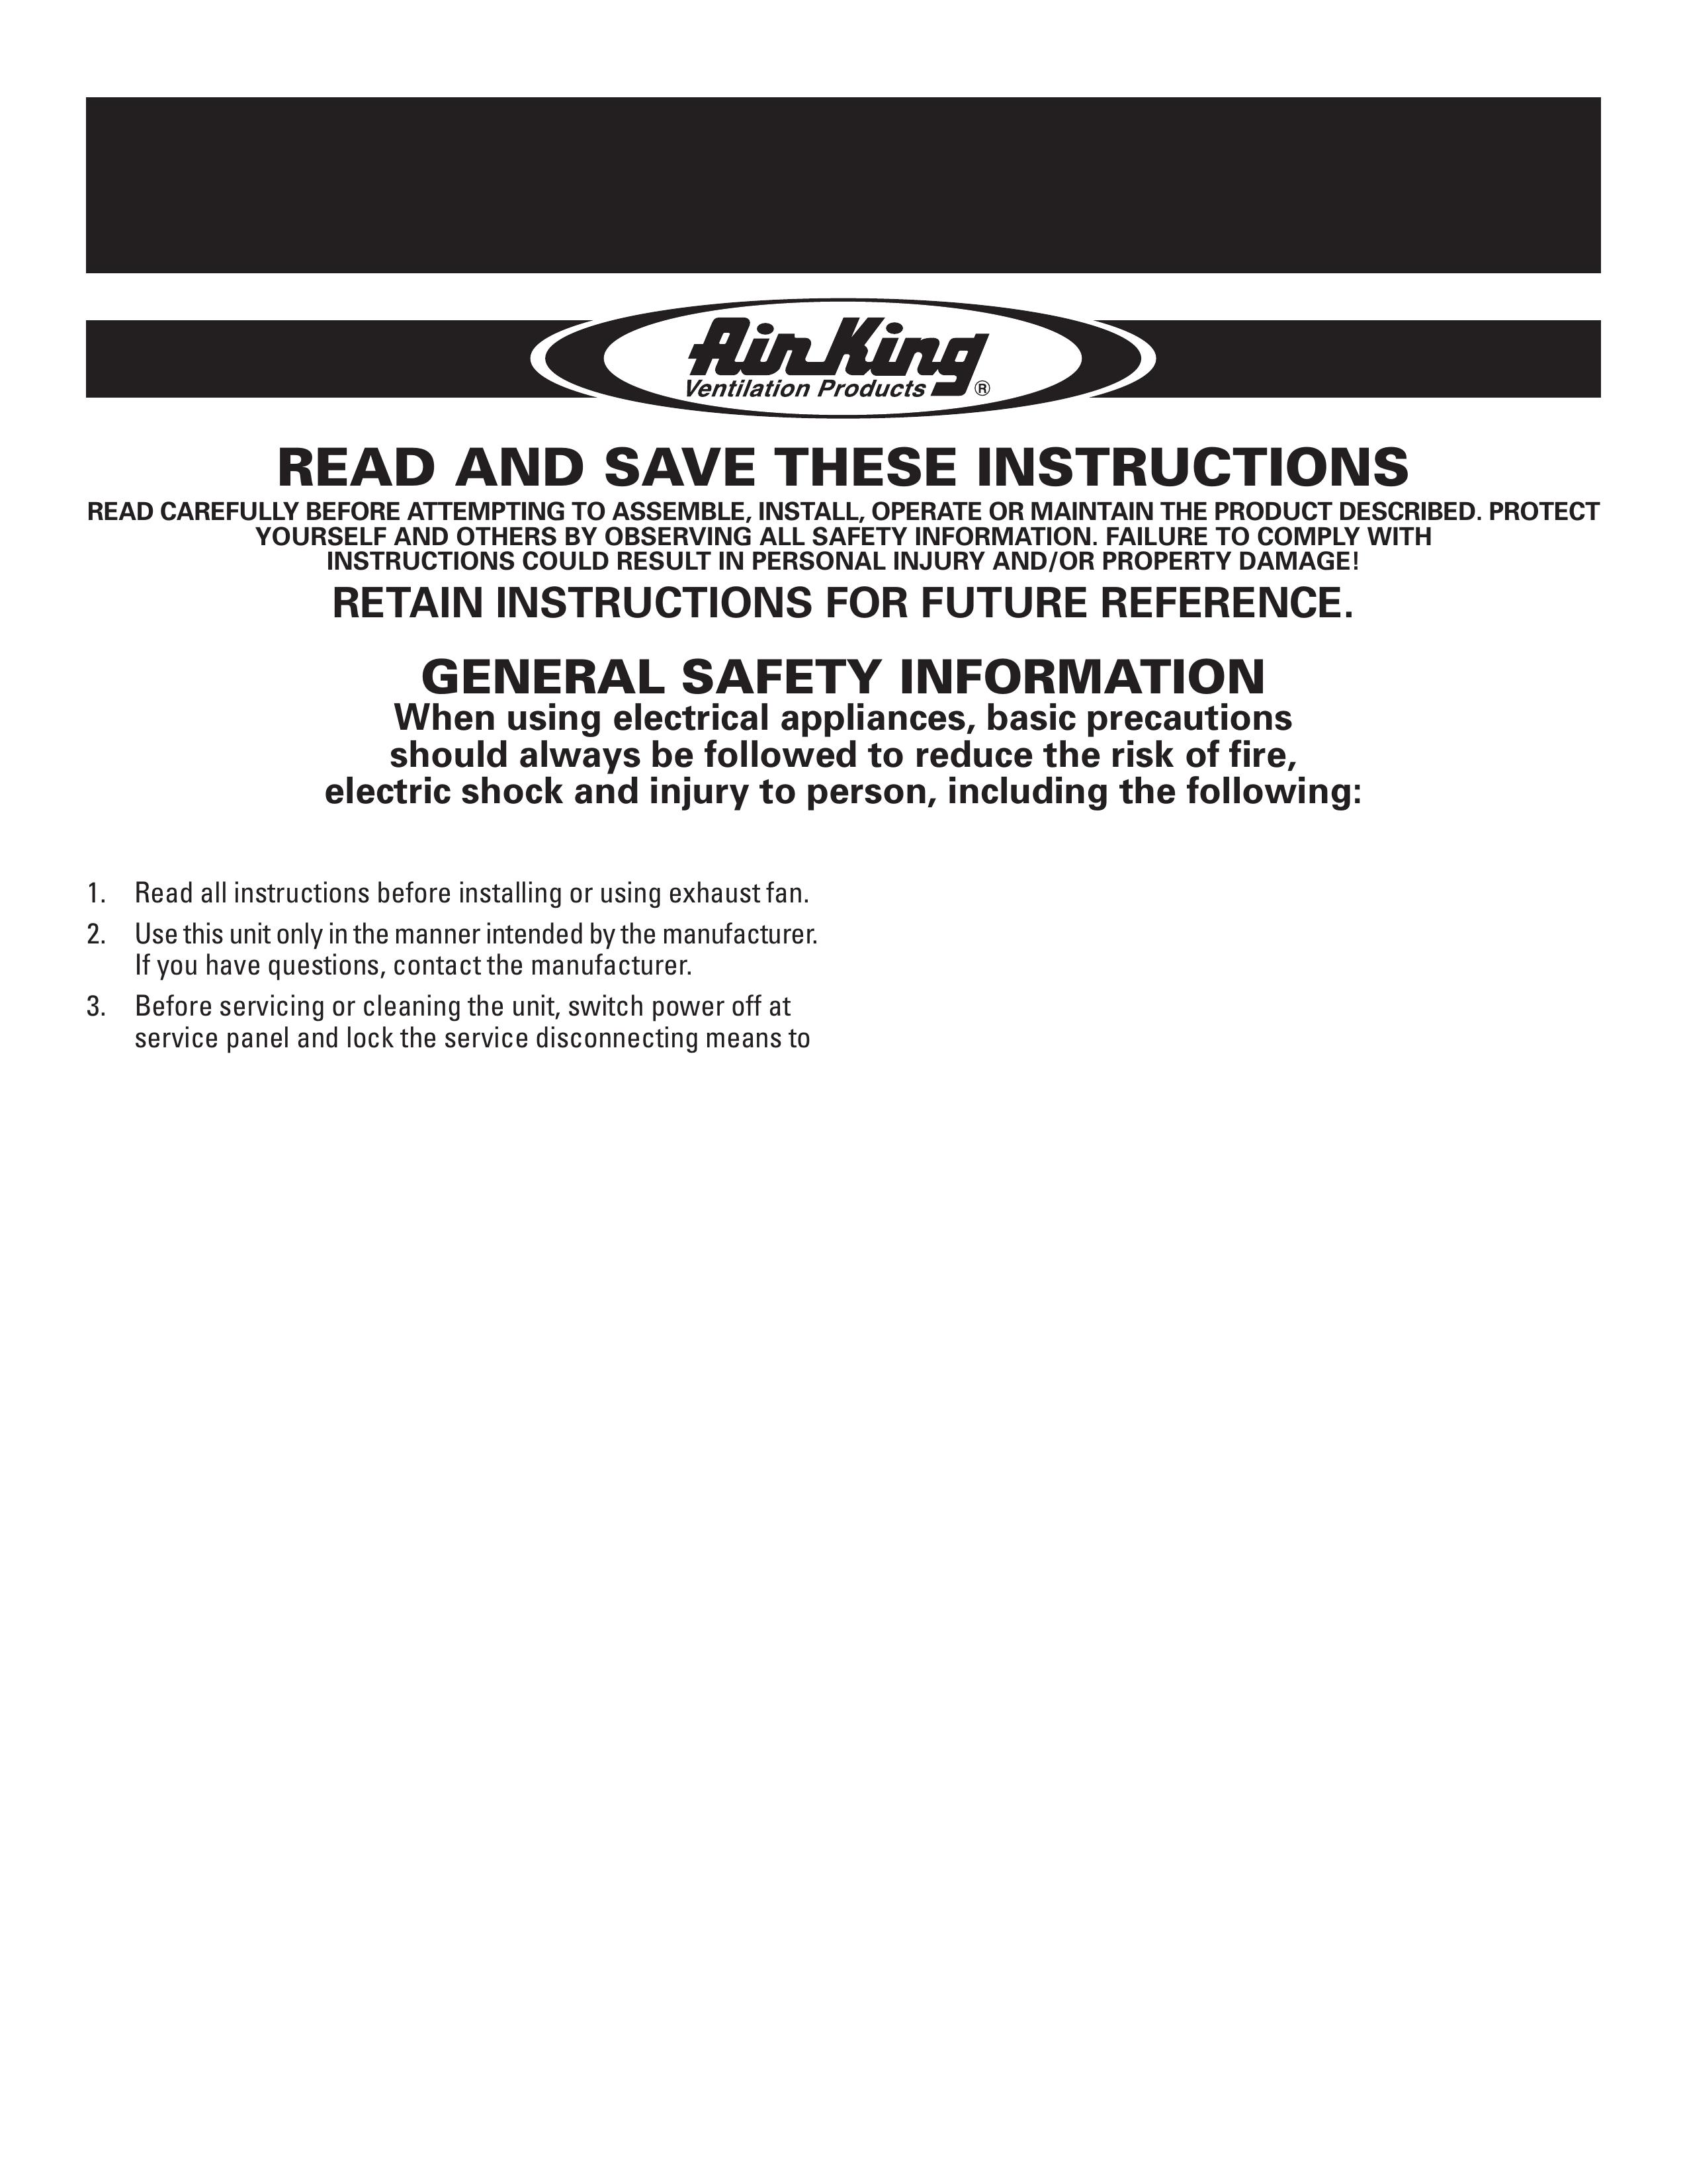 Air King AK130 Blower User Manual